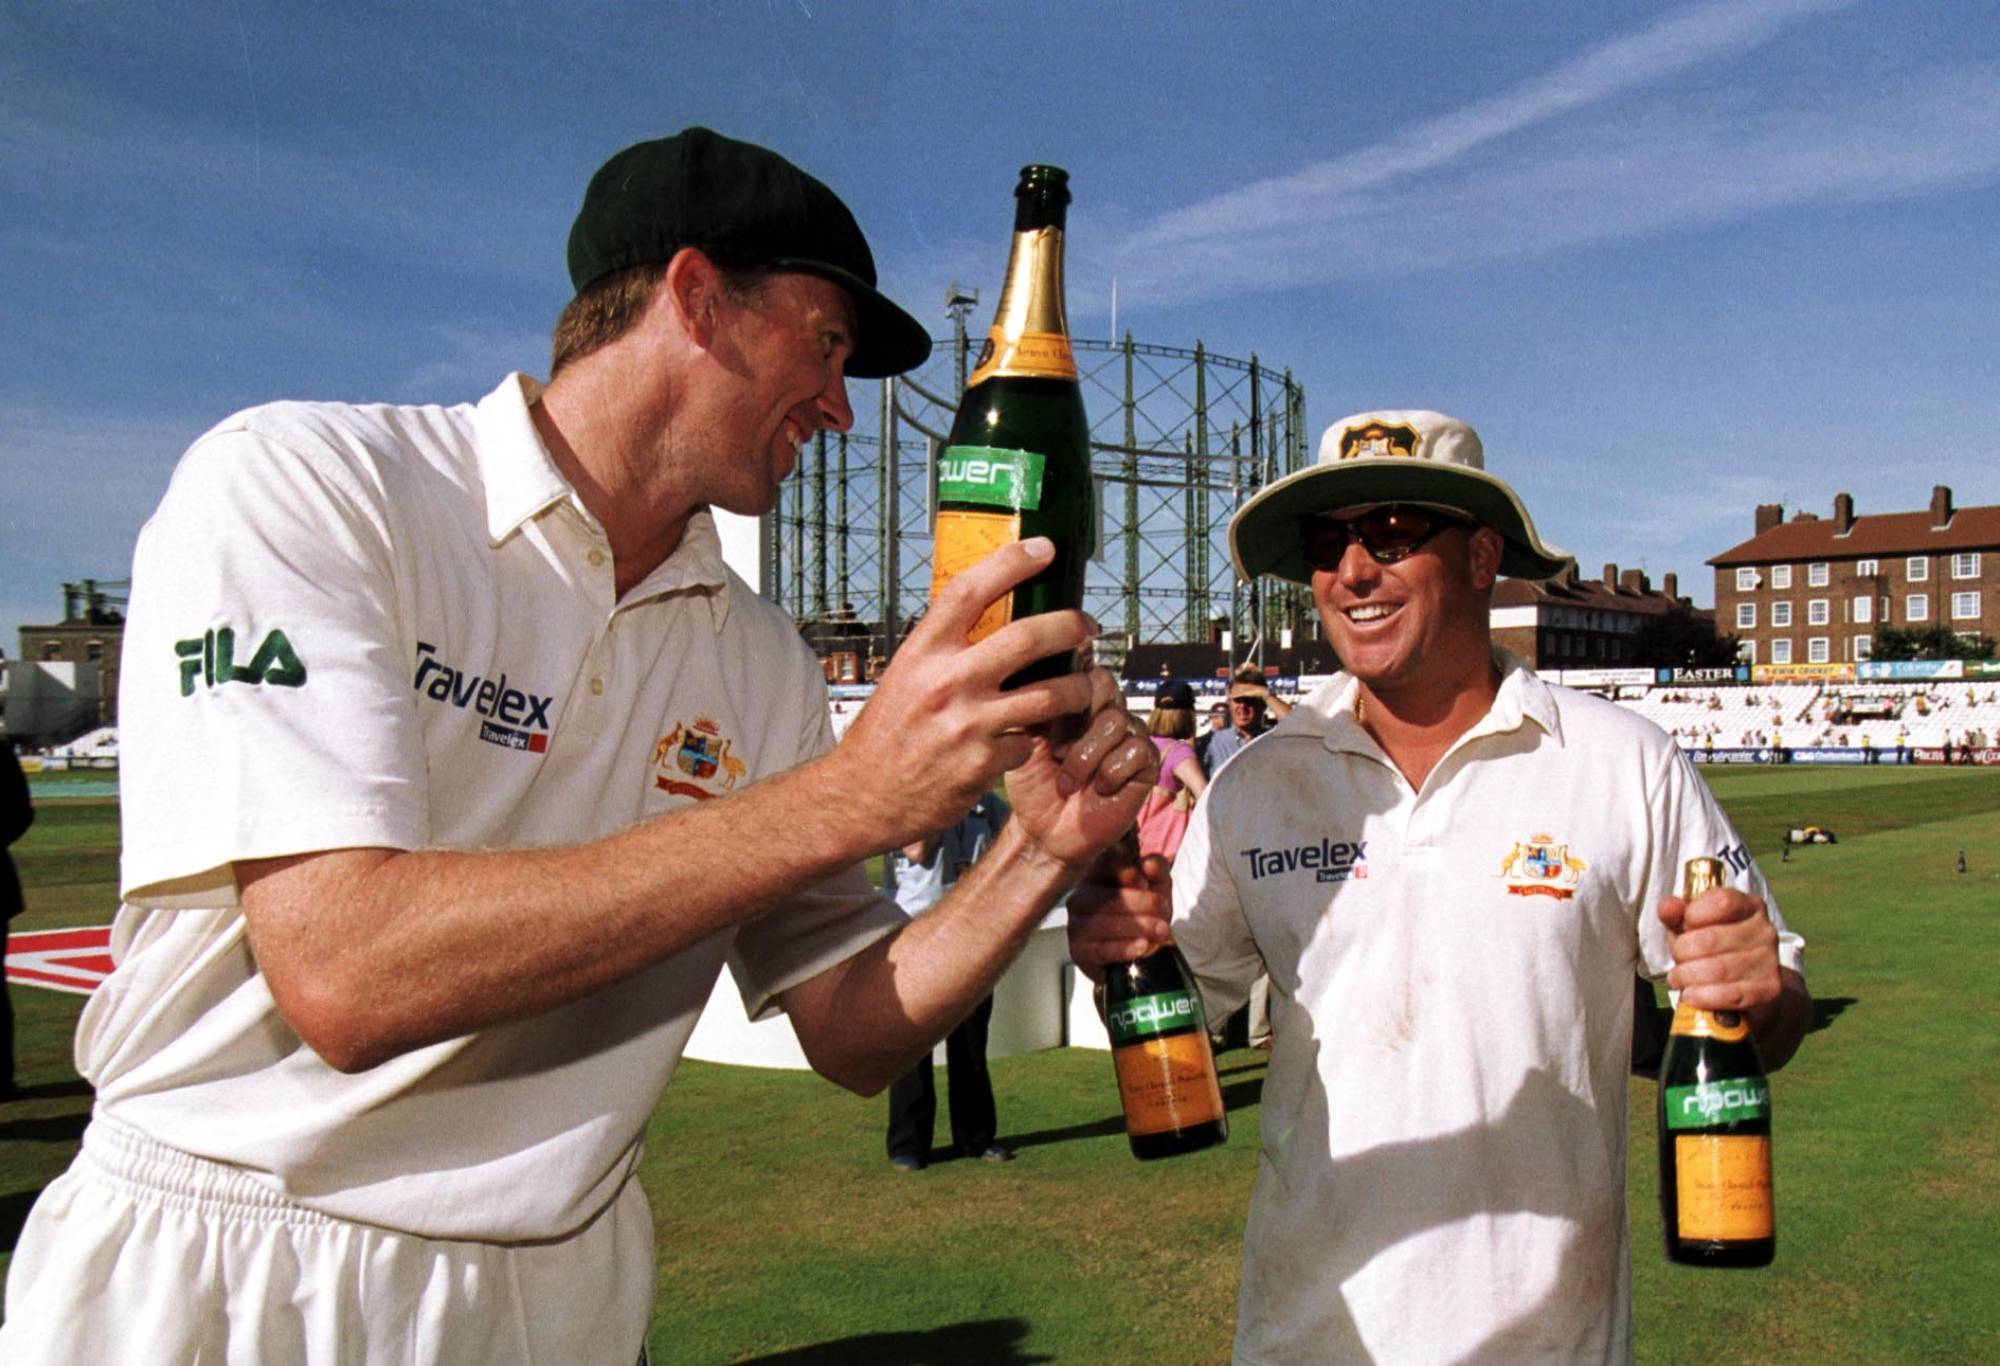 Shane Warne and Glenn McGrath at The Oval in 2001. Photo: Hamish Blair/ALLSPORT